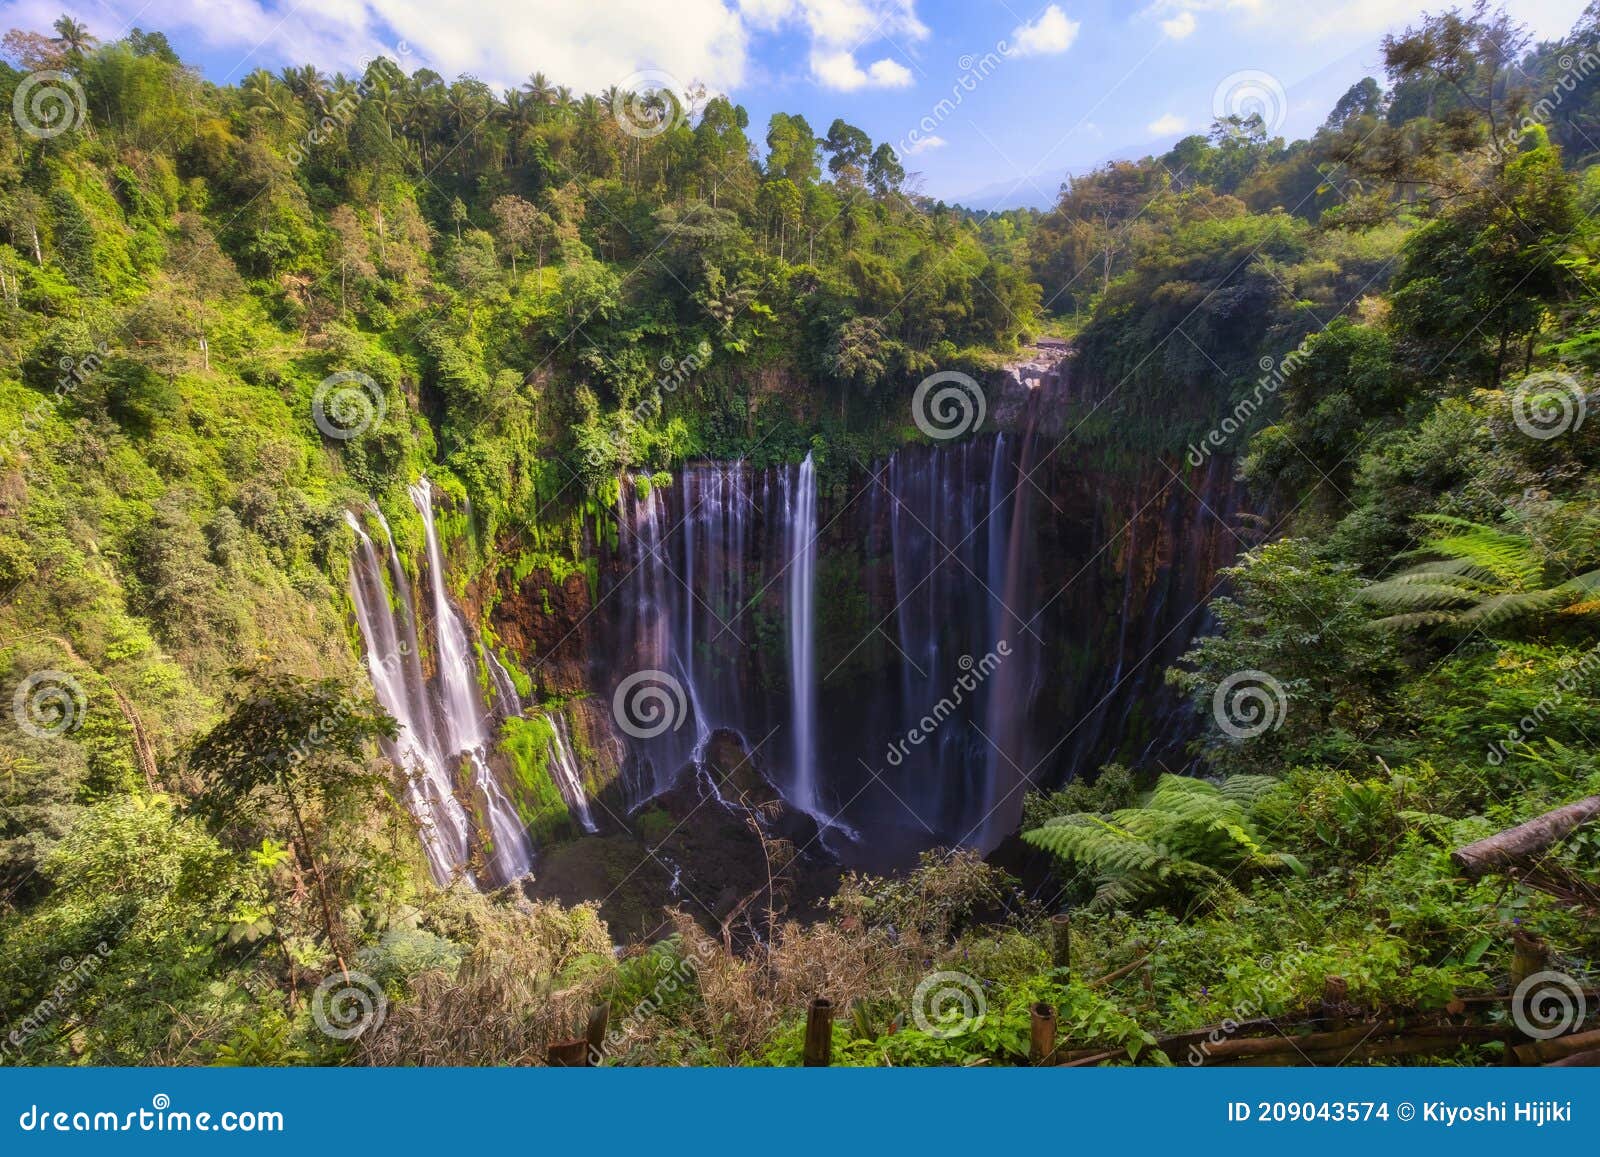 aerial view of tropical rainforest coban sewu waterfall in east java